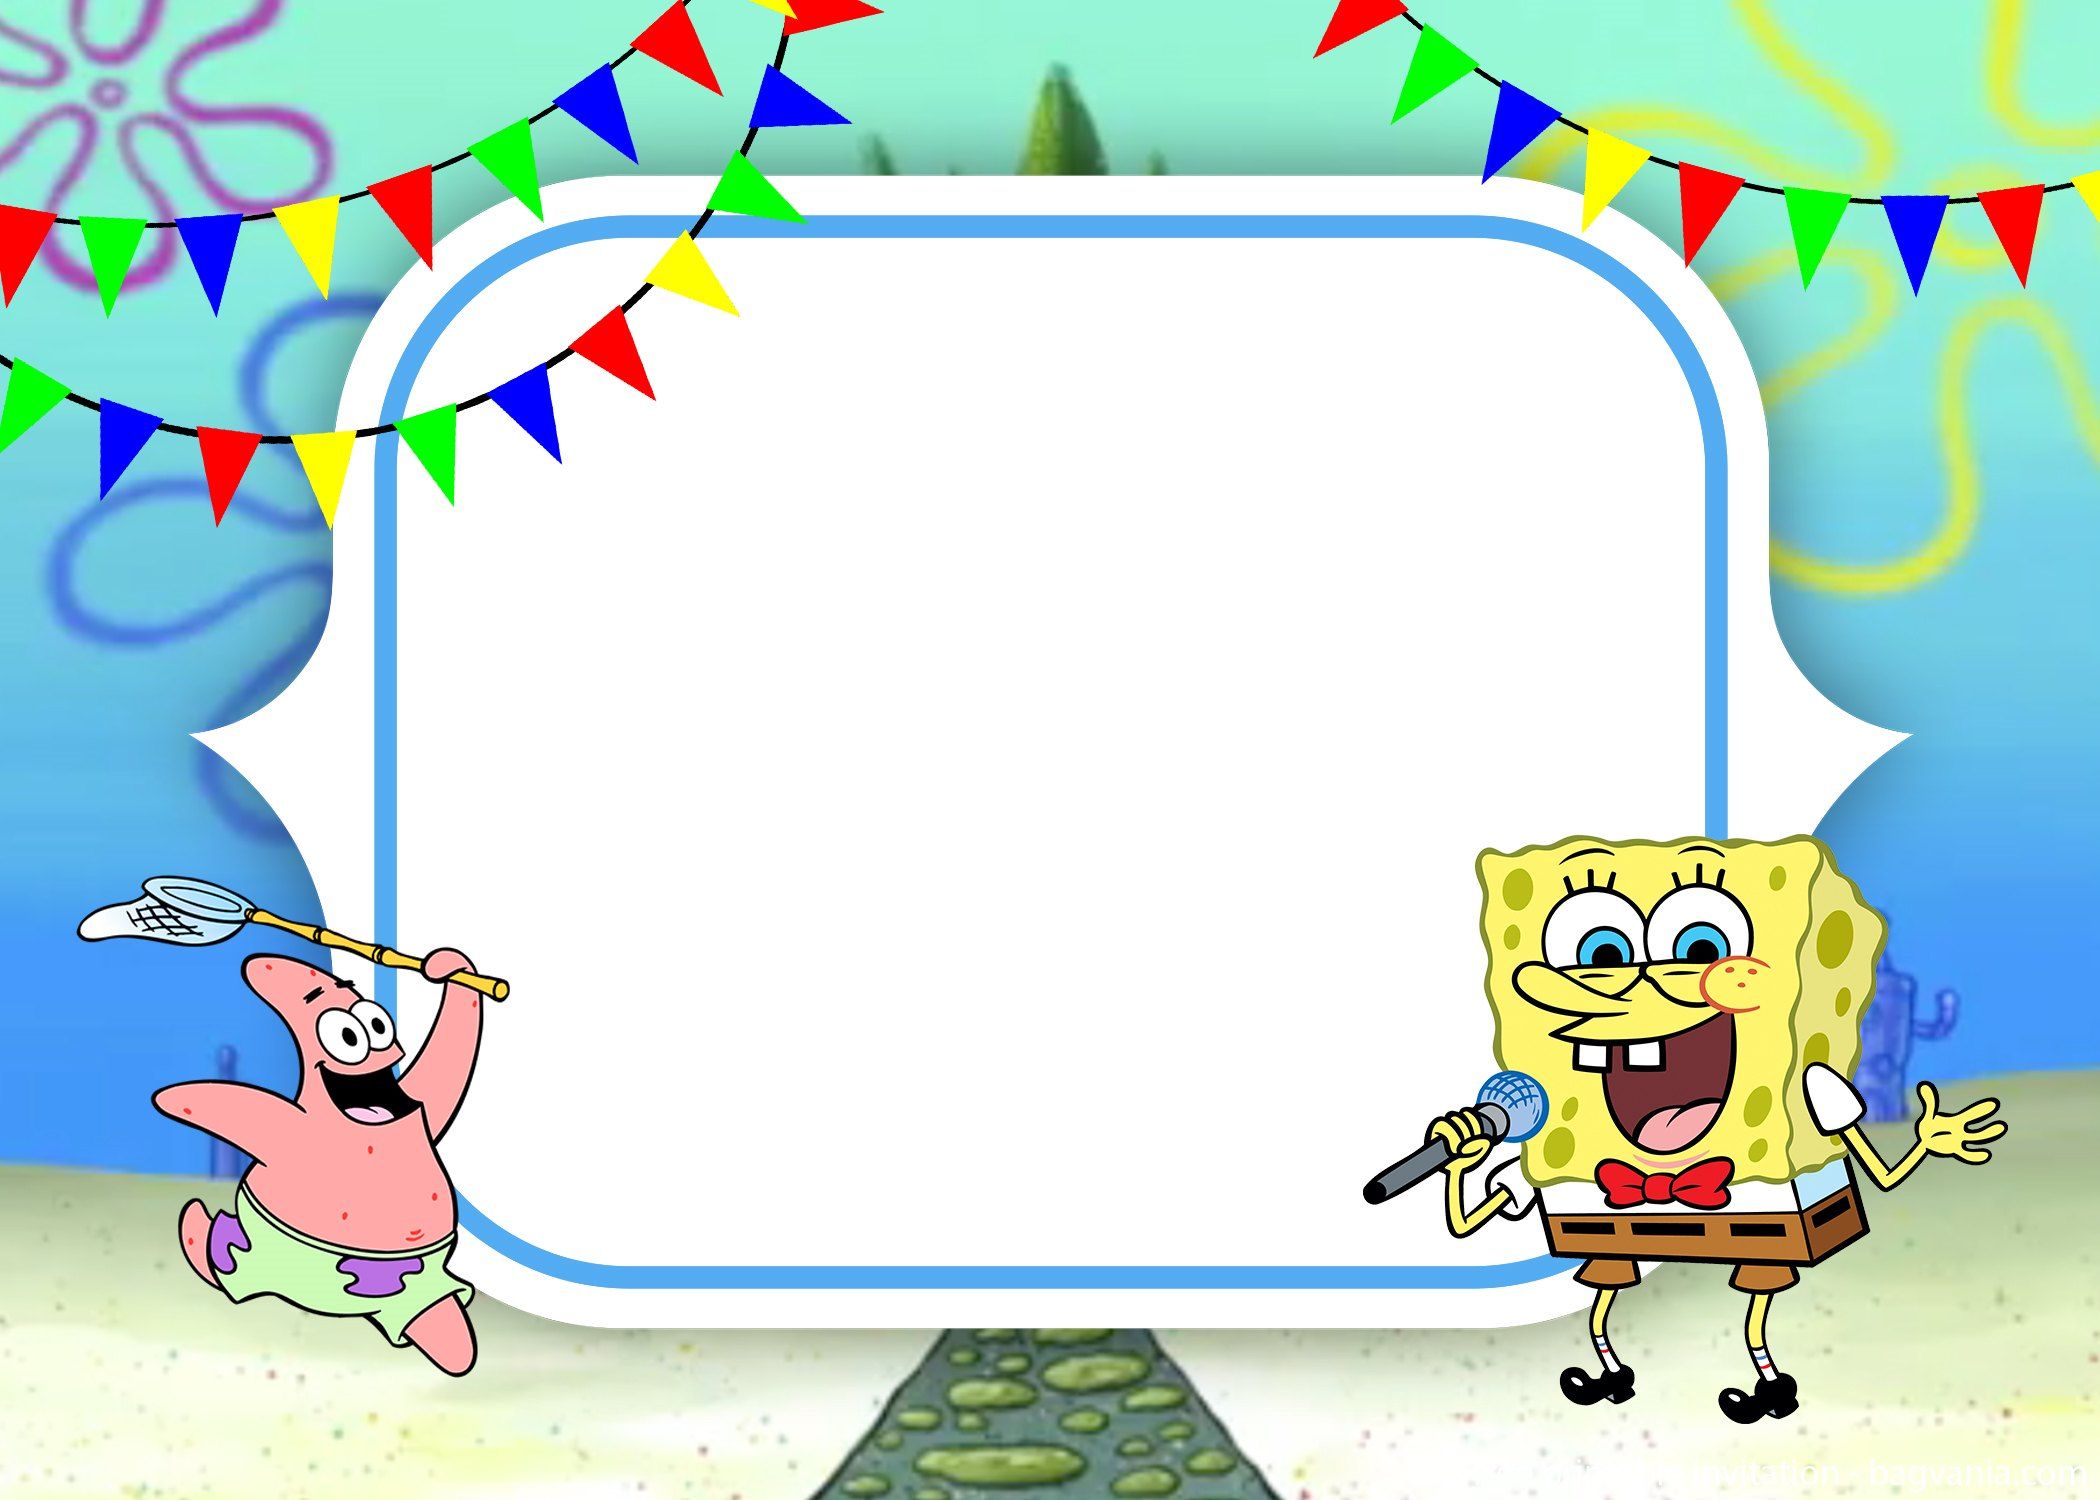 spongebob-frame-wallpapers-high-quality-download-free